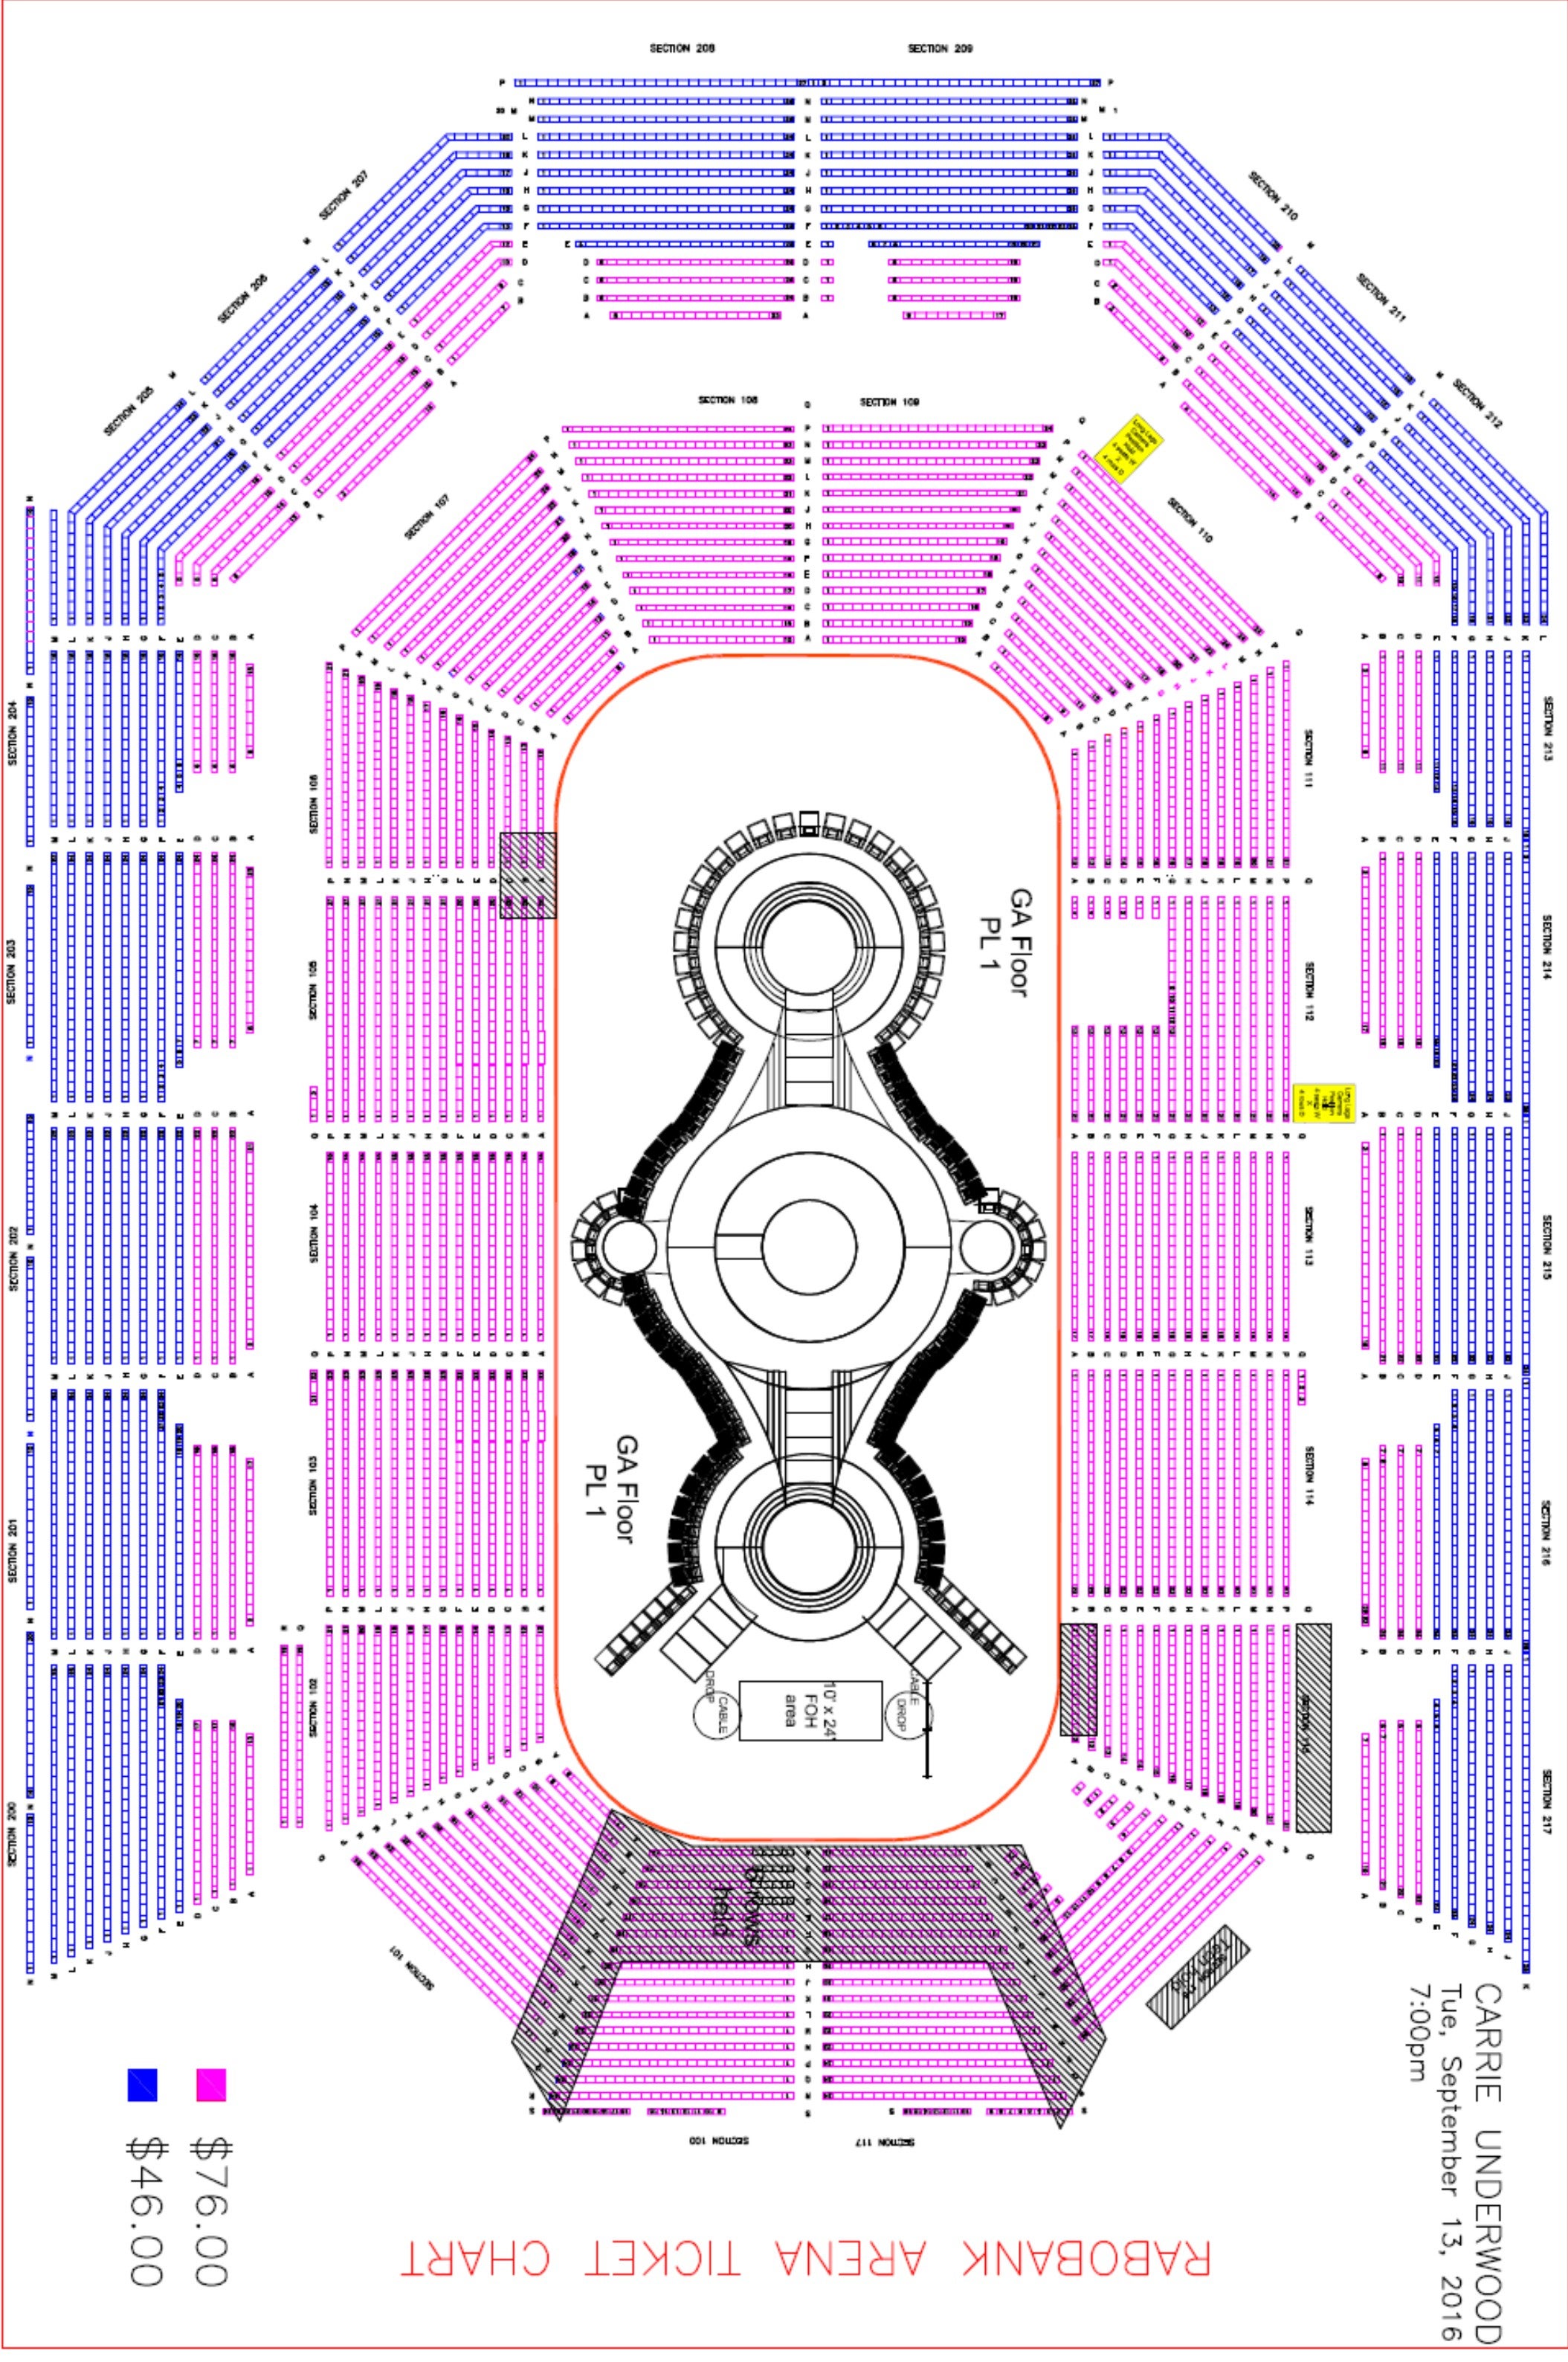 rabobank arena detailed seating chart